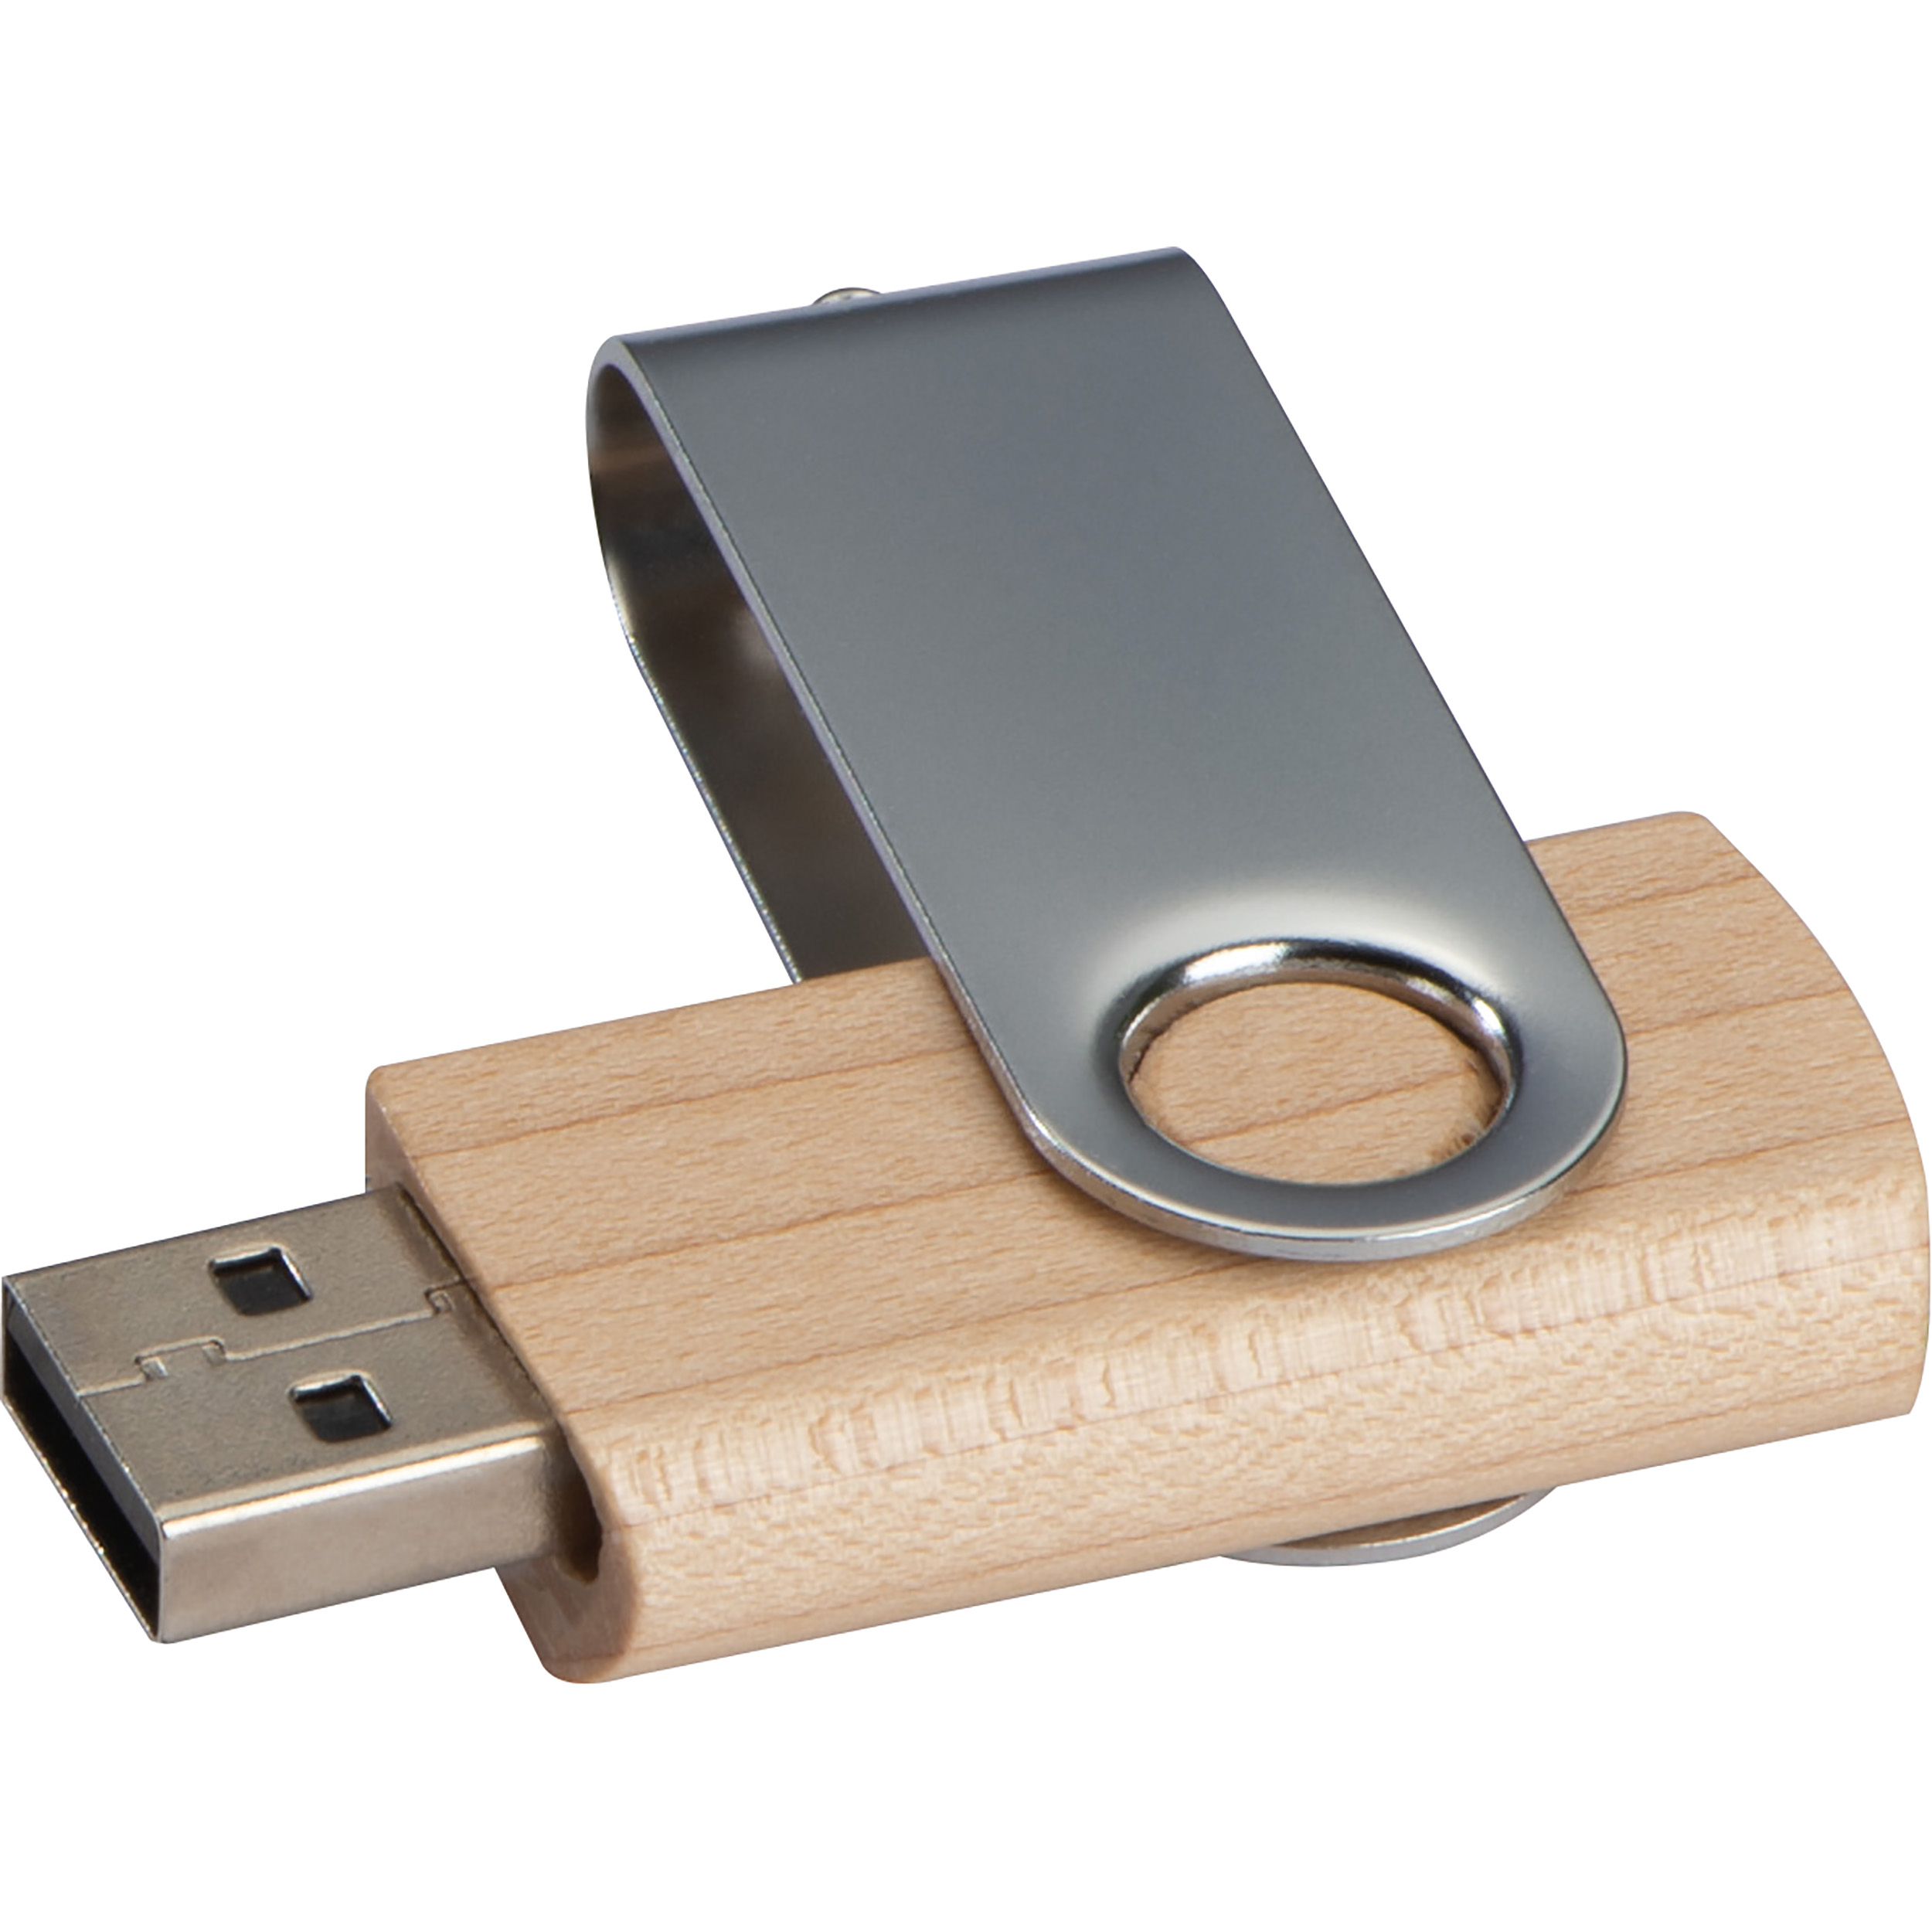 Clé USB Twister 8 GO